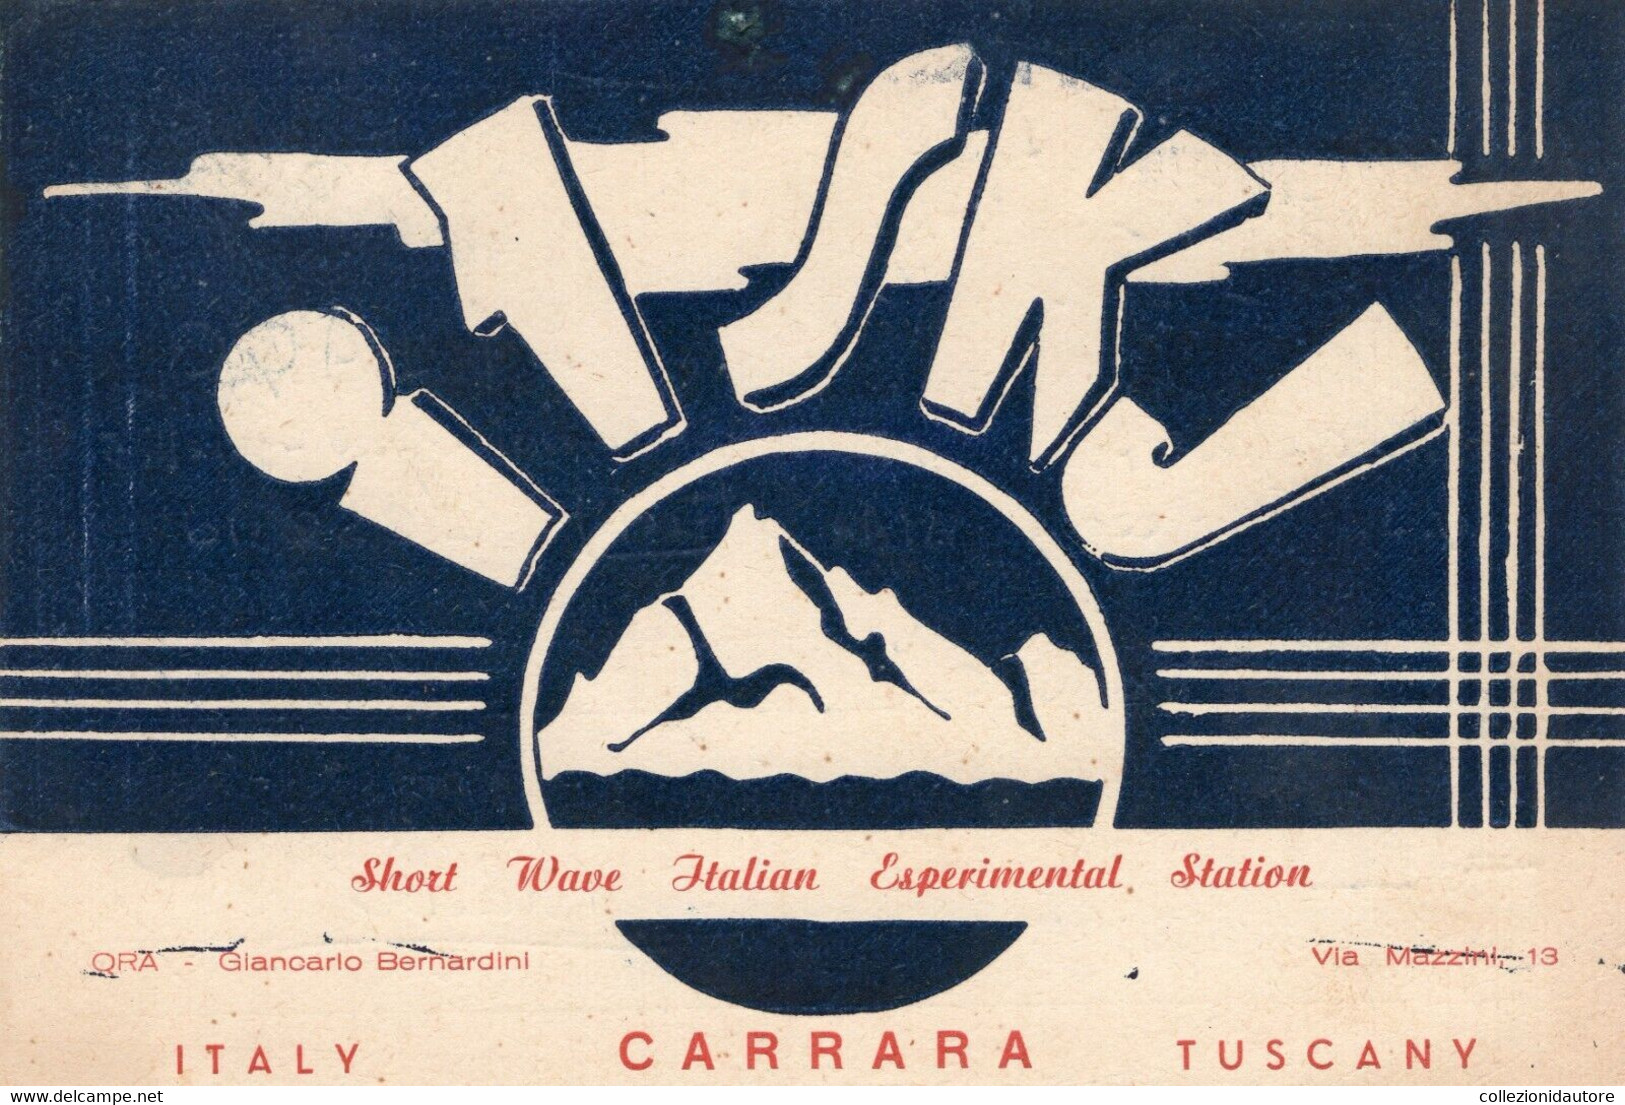 CB - CARRARA - TUSCANY - I 1 S K J - ITALY - CARTOLINA QSL FG SPEDITA NEL 1952 CARRARA-CESENA - CB